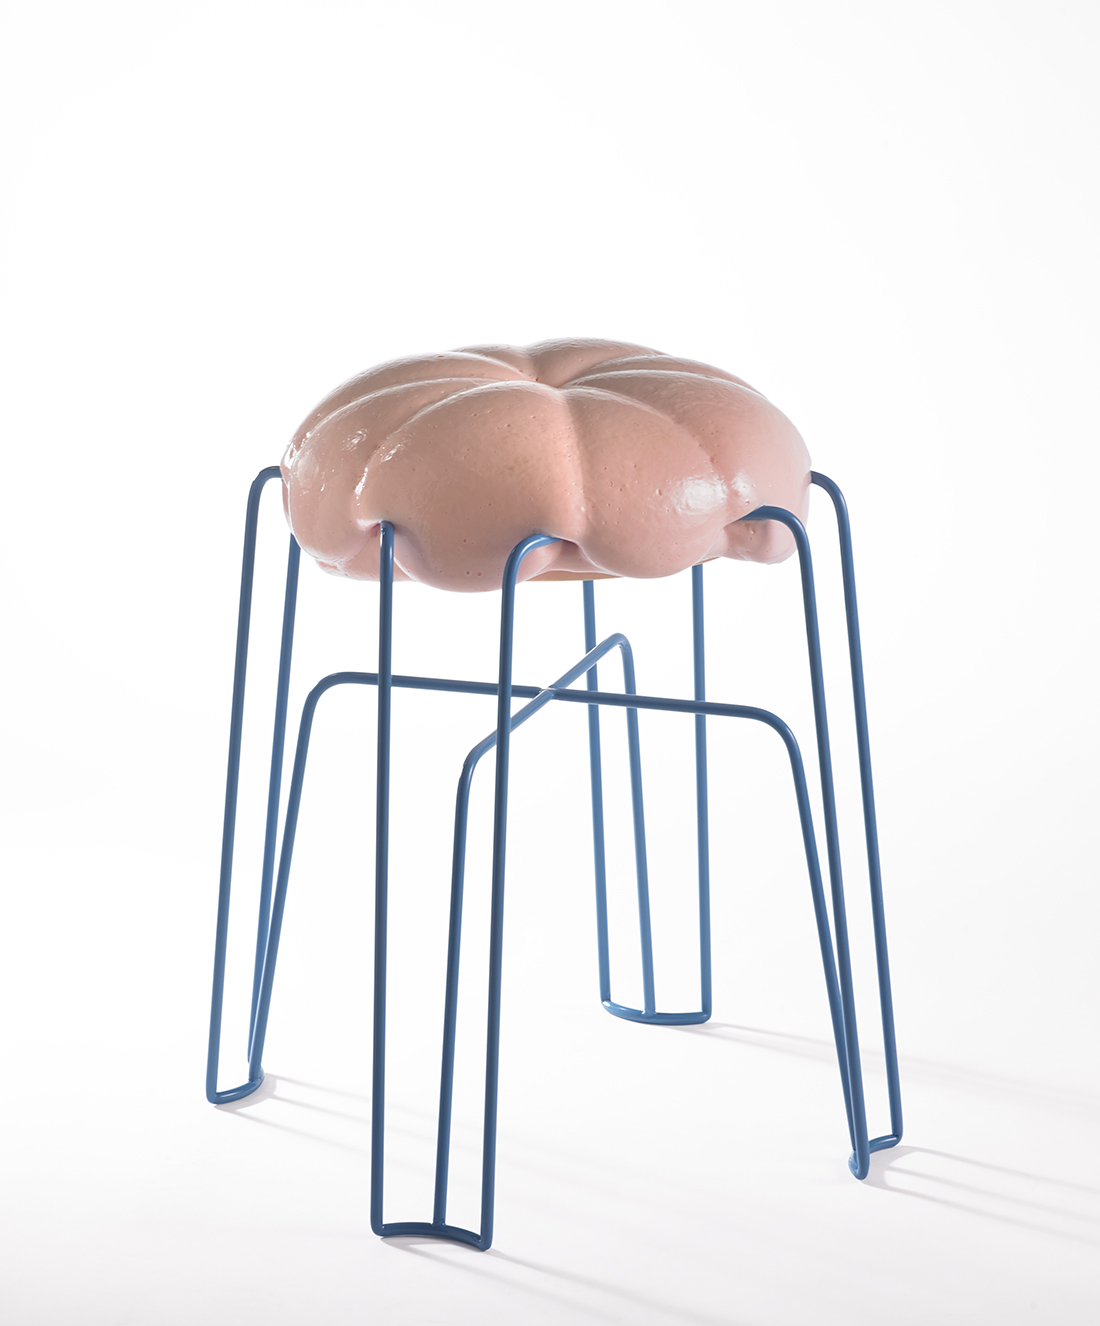 Marshmallow stool by Paul Ketz | Flodeau.com